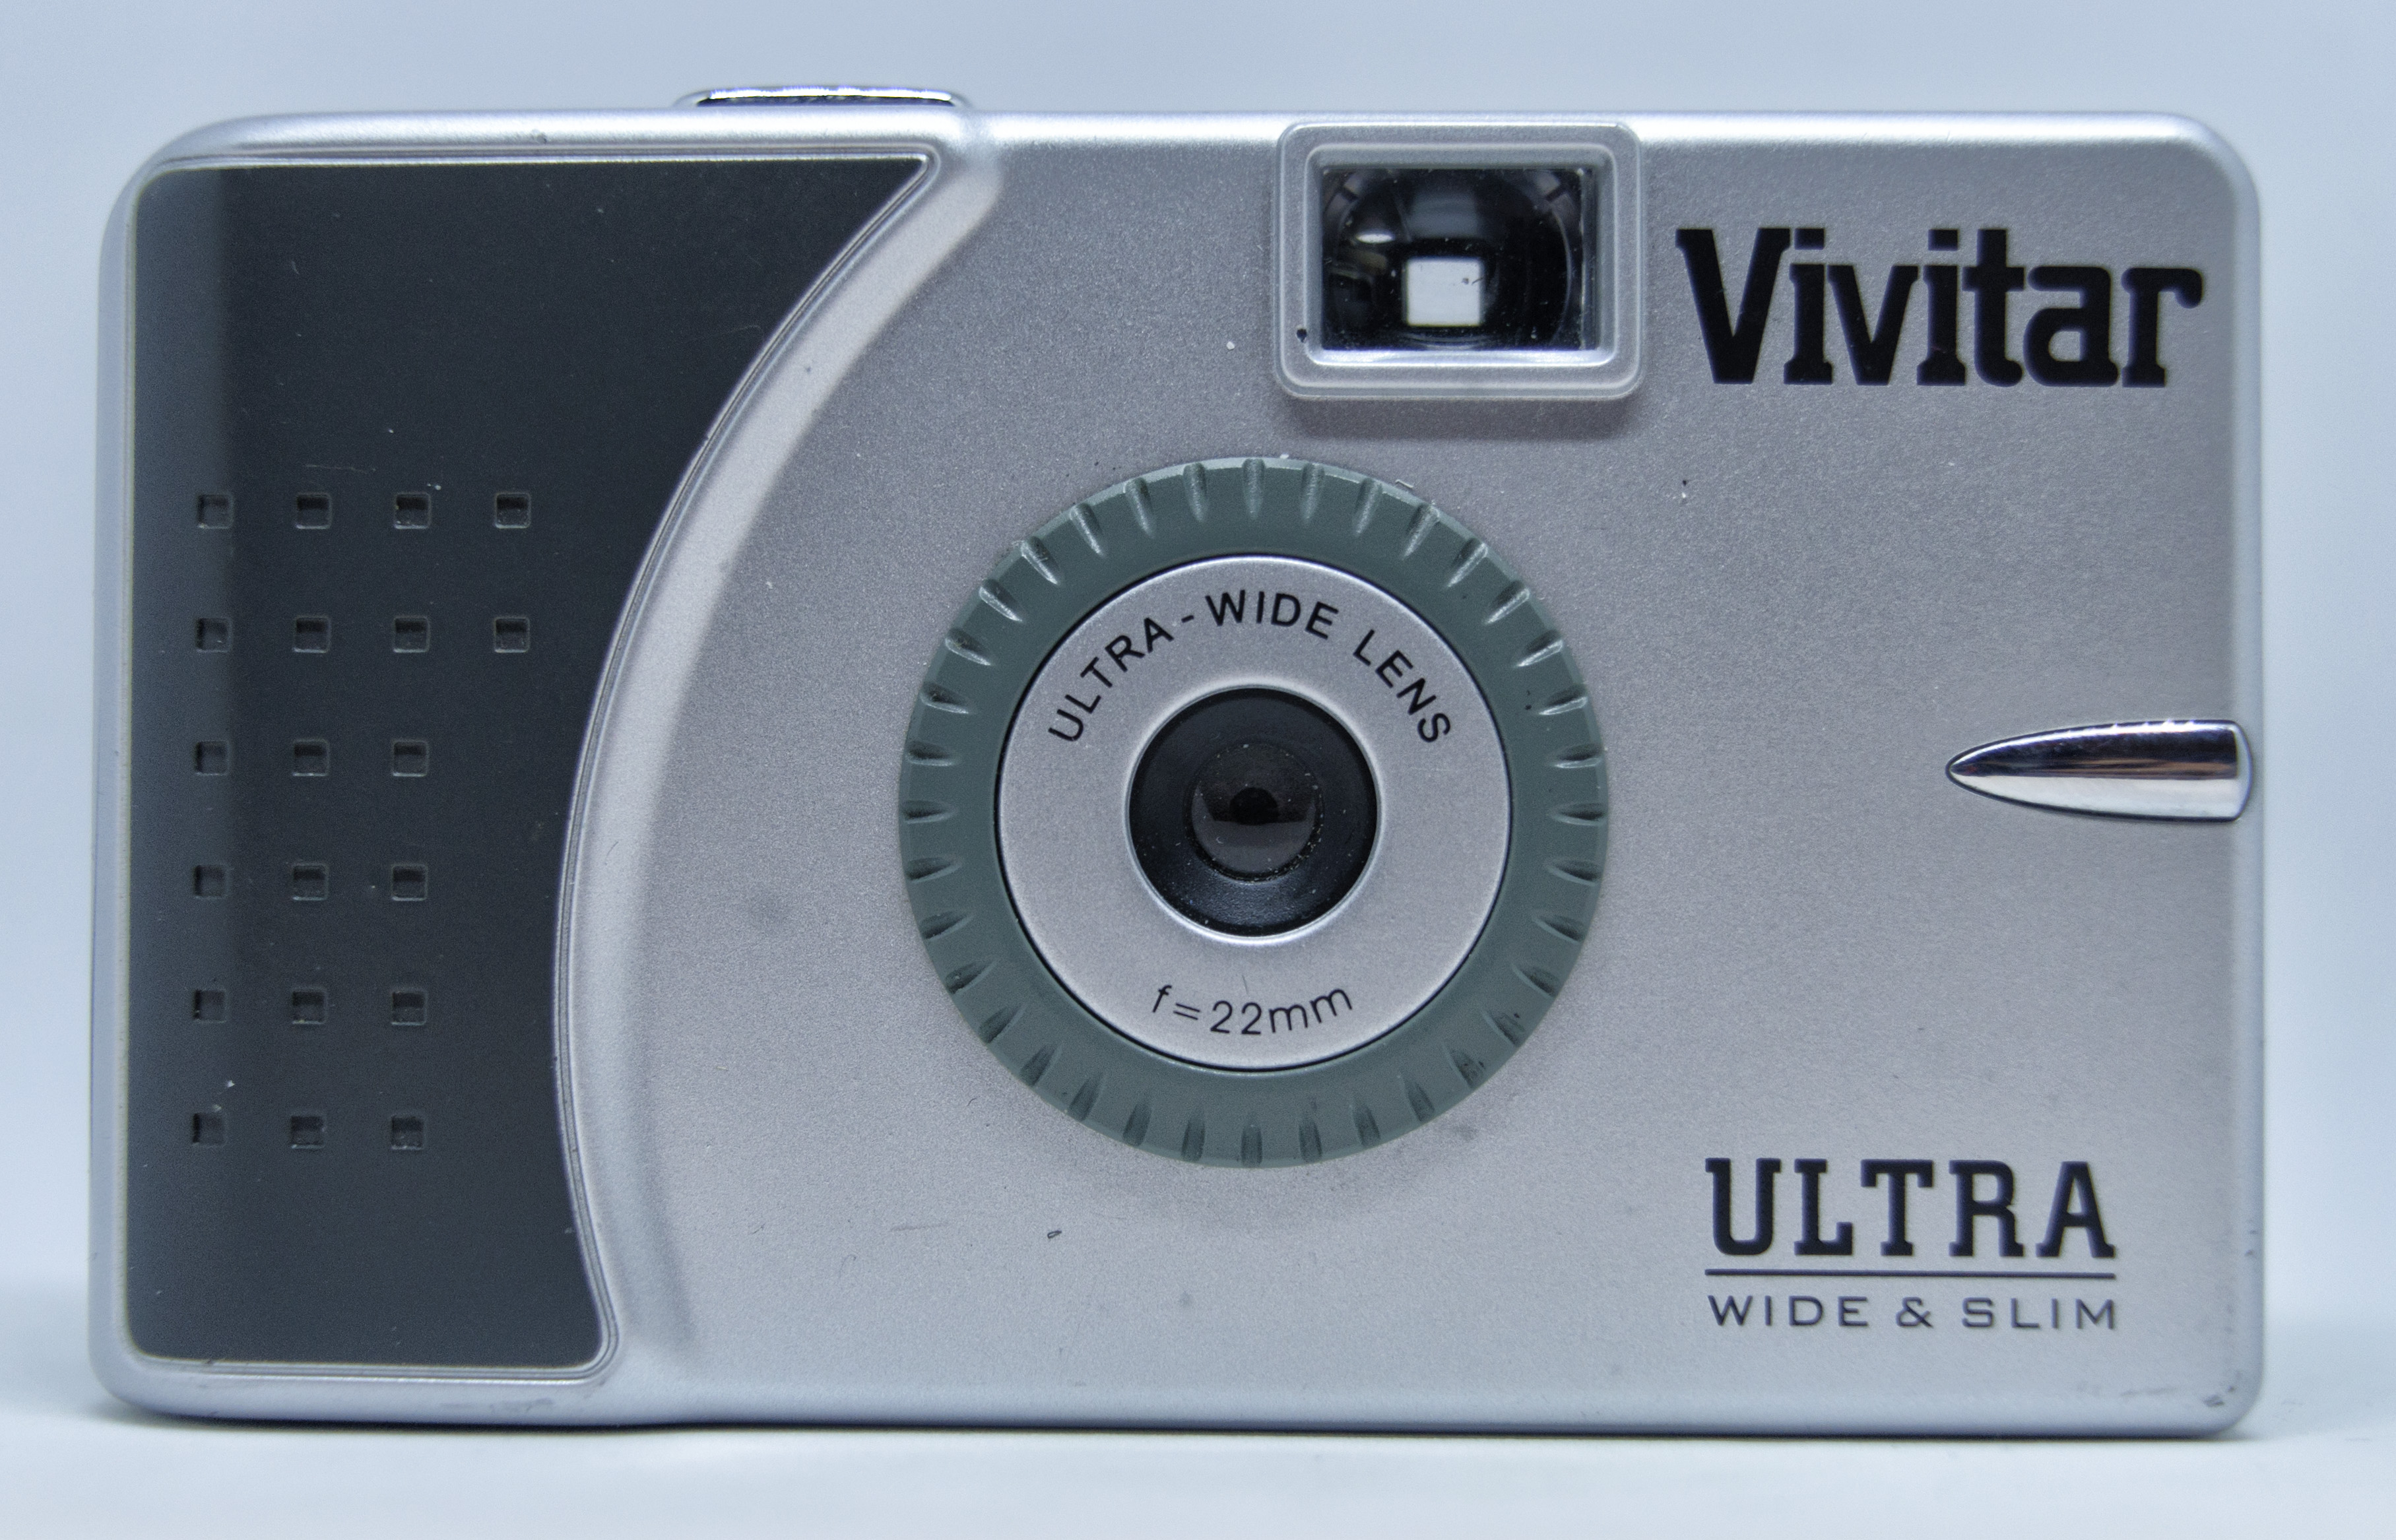 Vivitar Ultra: that lens